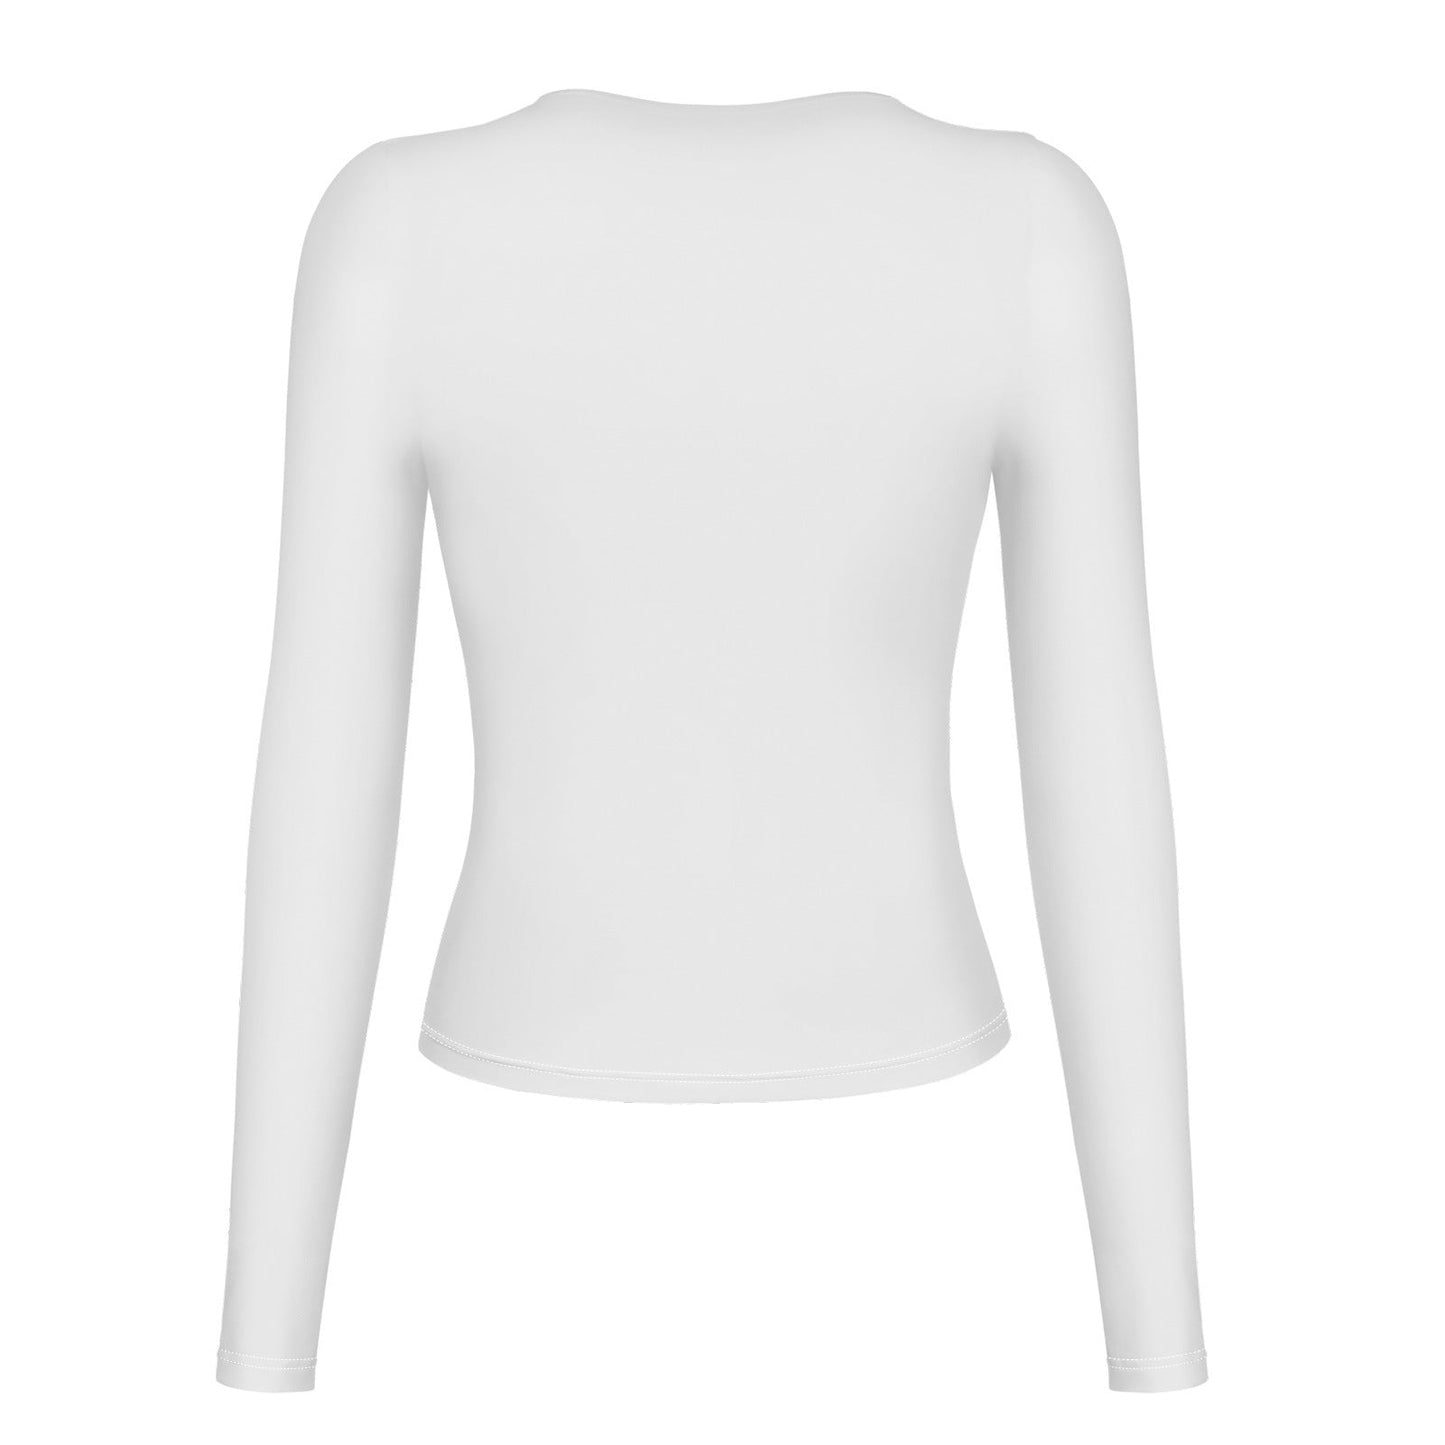 Fashion Midriff Baring Long Sleeves Tight T Shirts-Shirts & Tops-White-S-Free Shipping Leatheretro